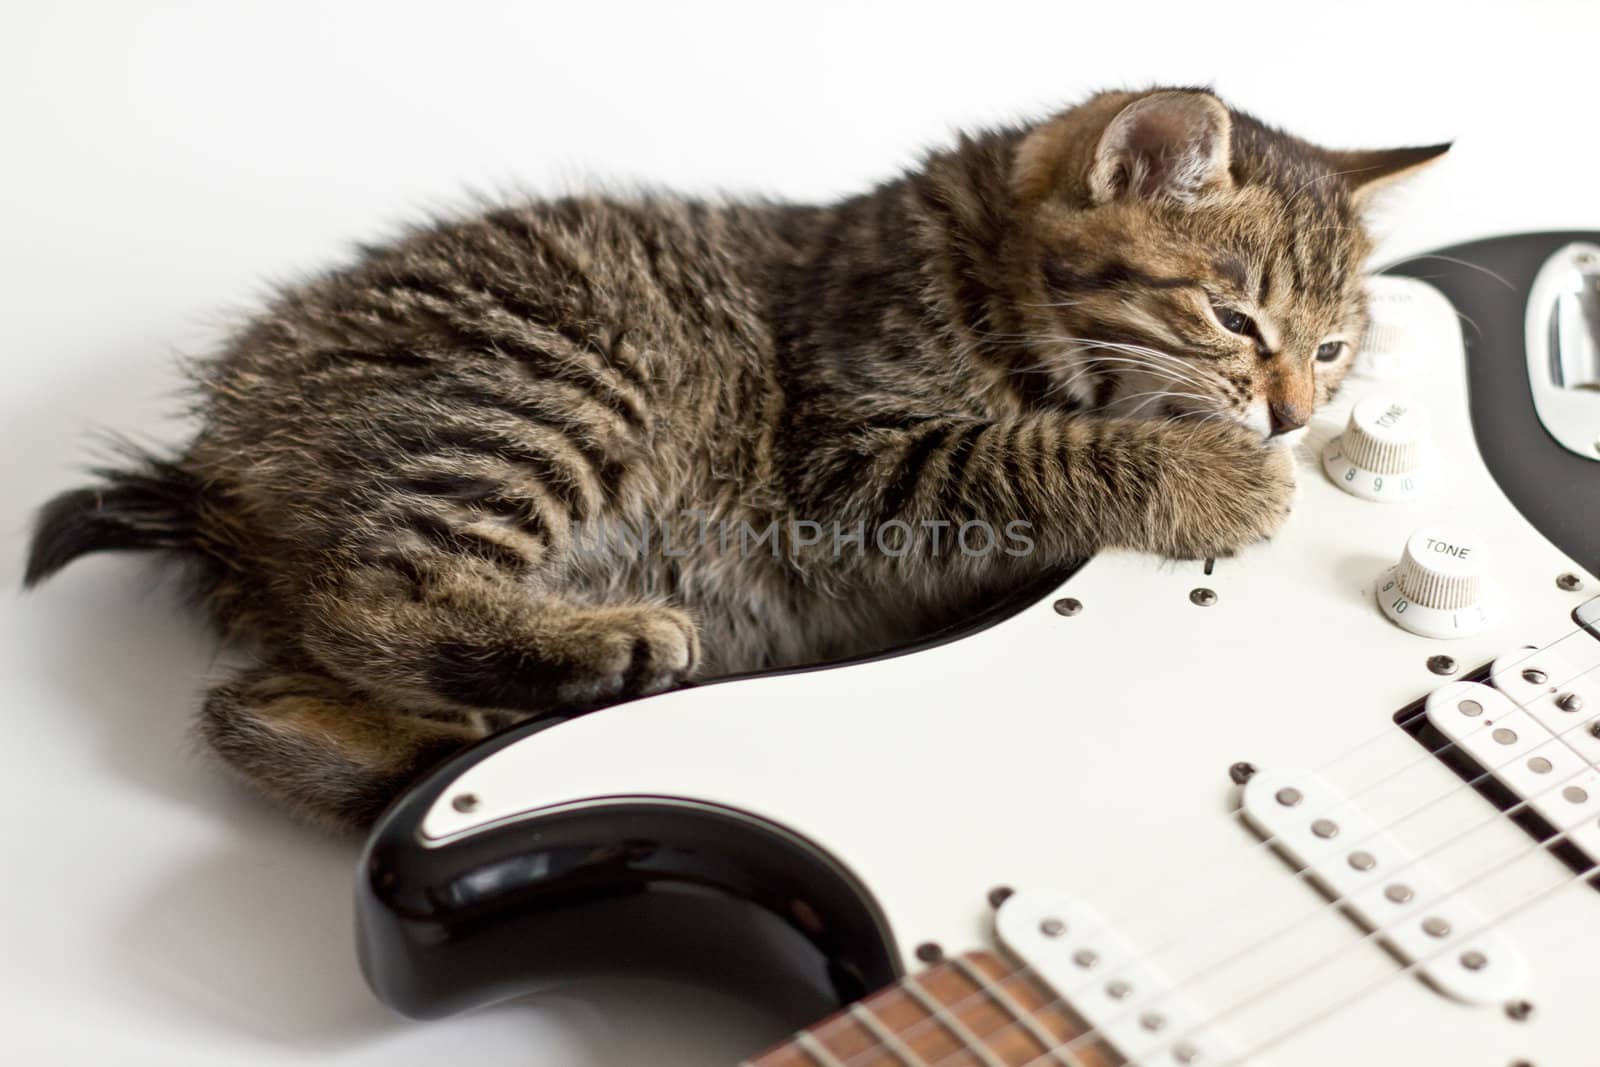 Little kitten kuril bobtail and guitar isolated on white